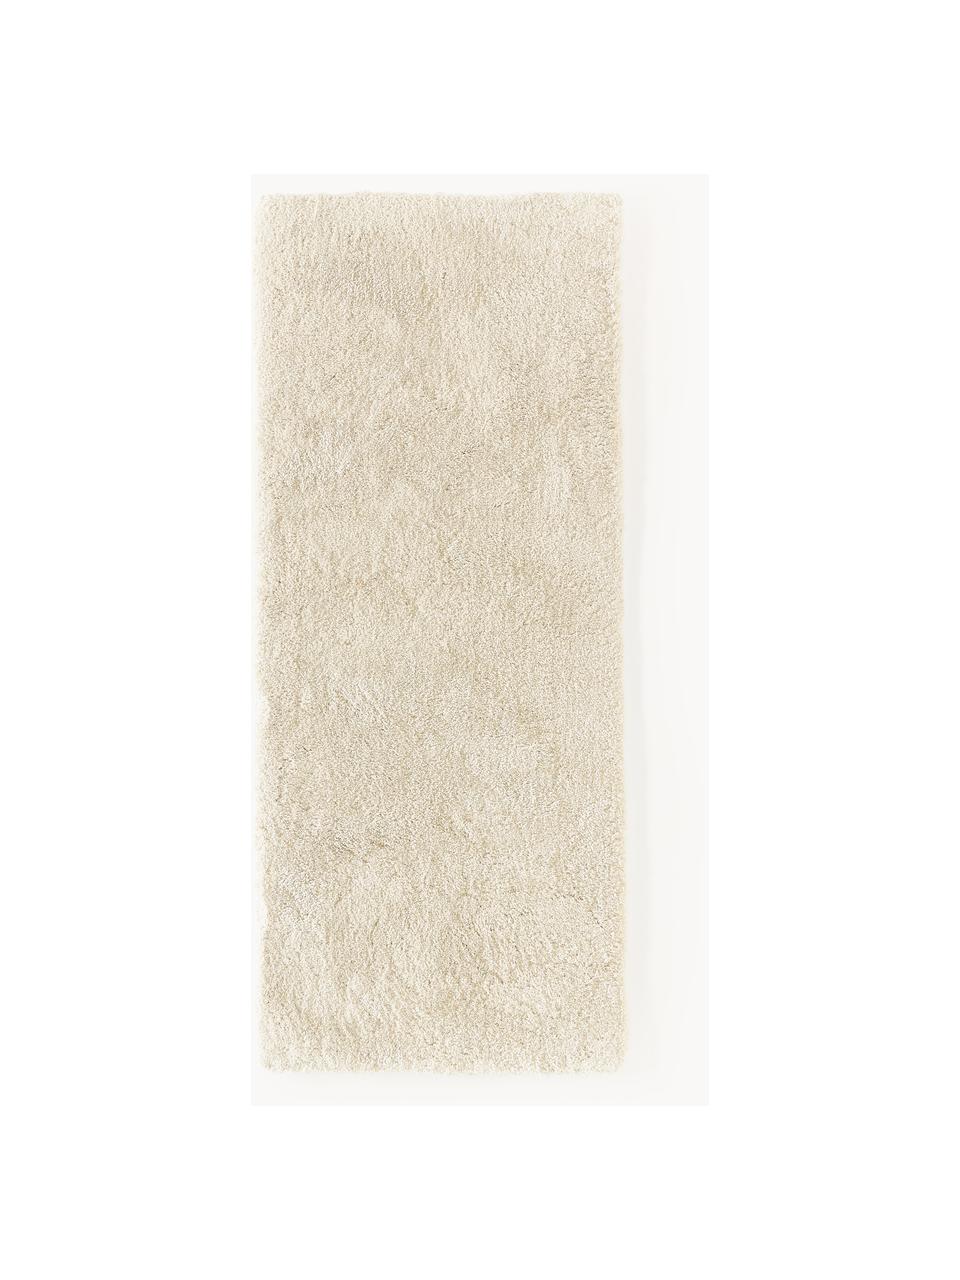 Pluizige hoogpolige loper Leighton, Onderzijde: 70% polyester, 30% katoen, Crèmewit, B 80 x L 200 cm